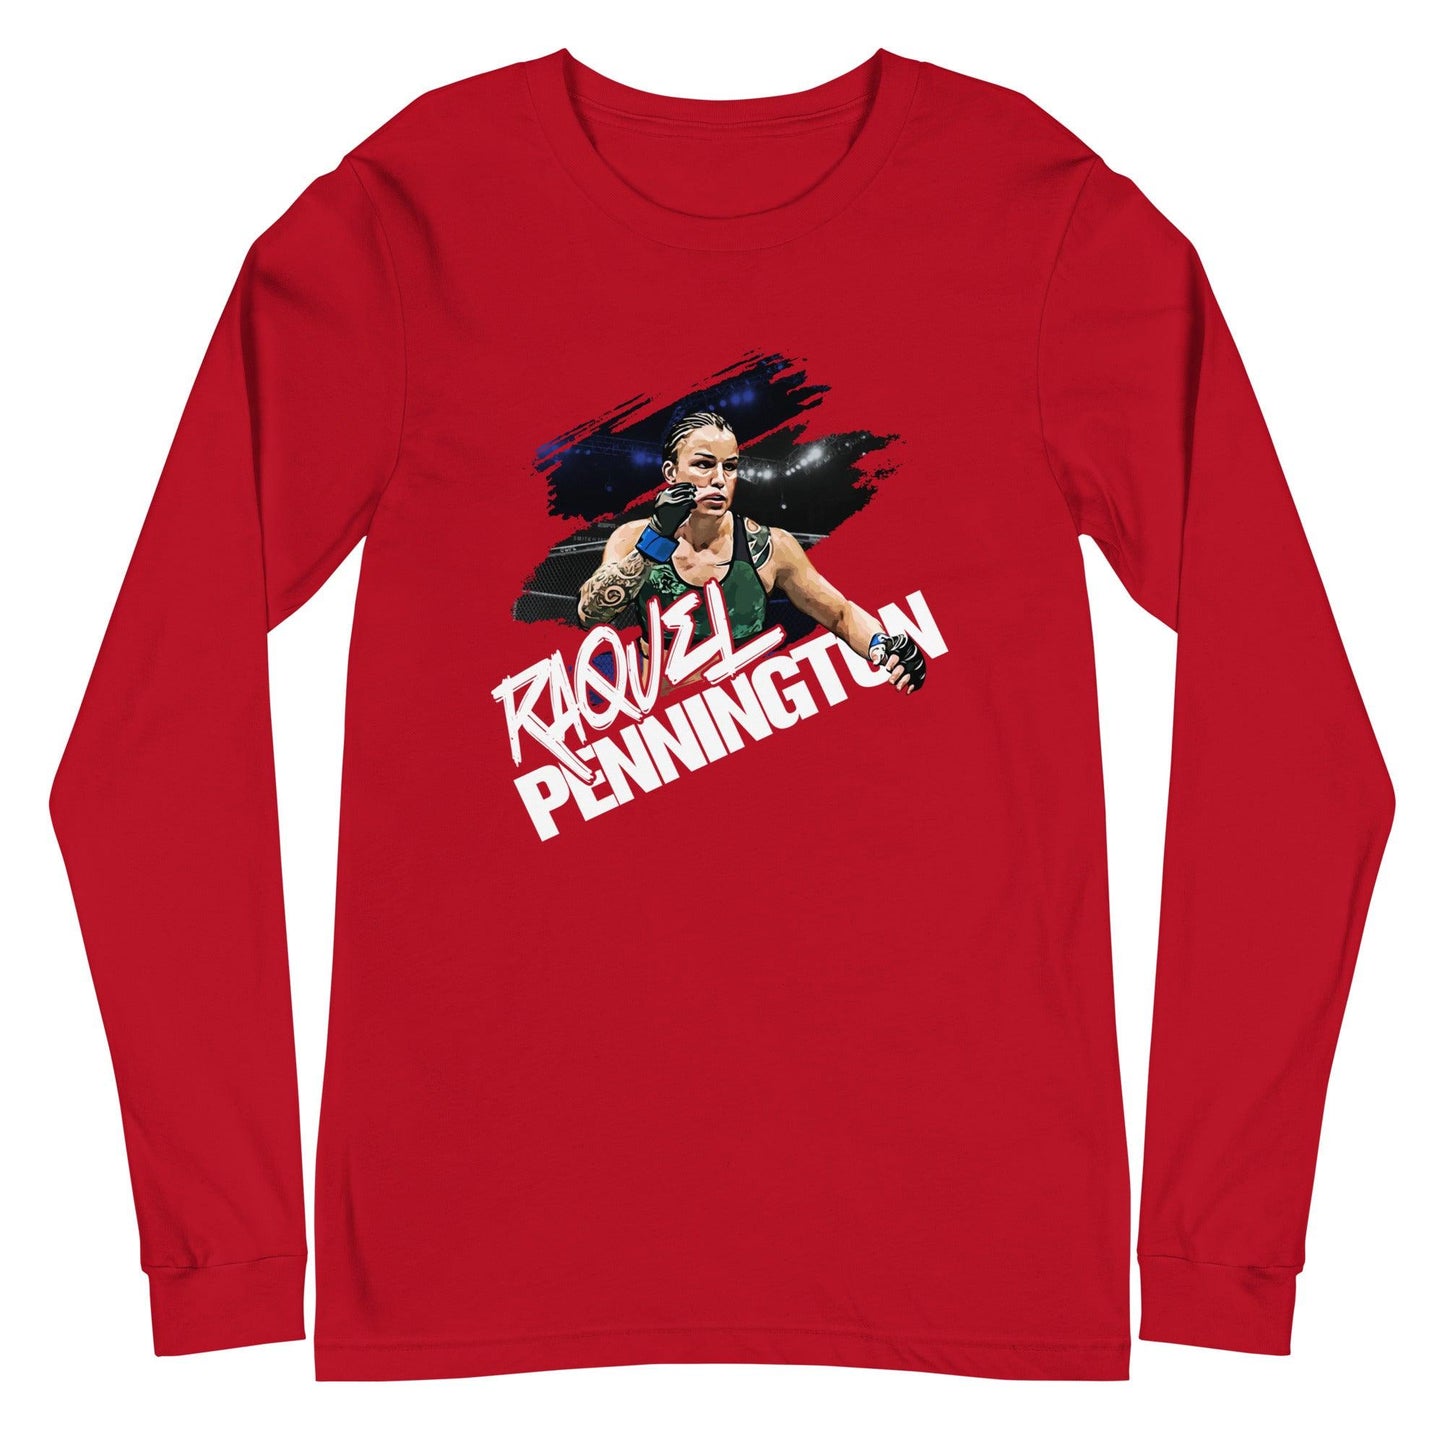 Raquel Pennington "Fight Night" Long Sleeve Tee - Fan Arch